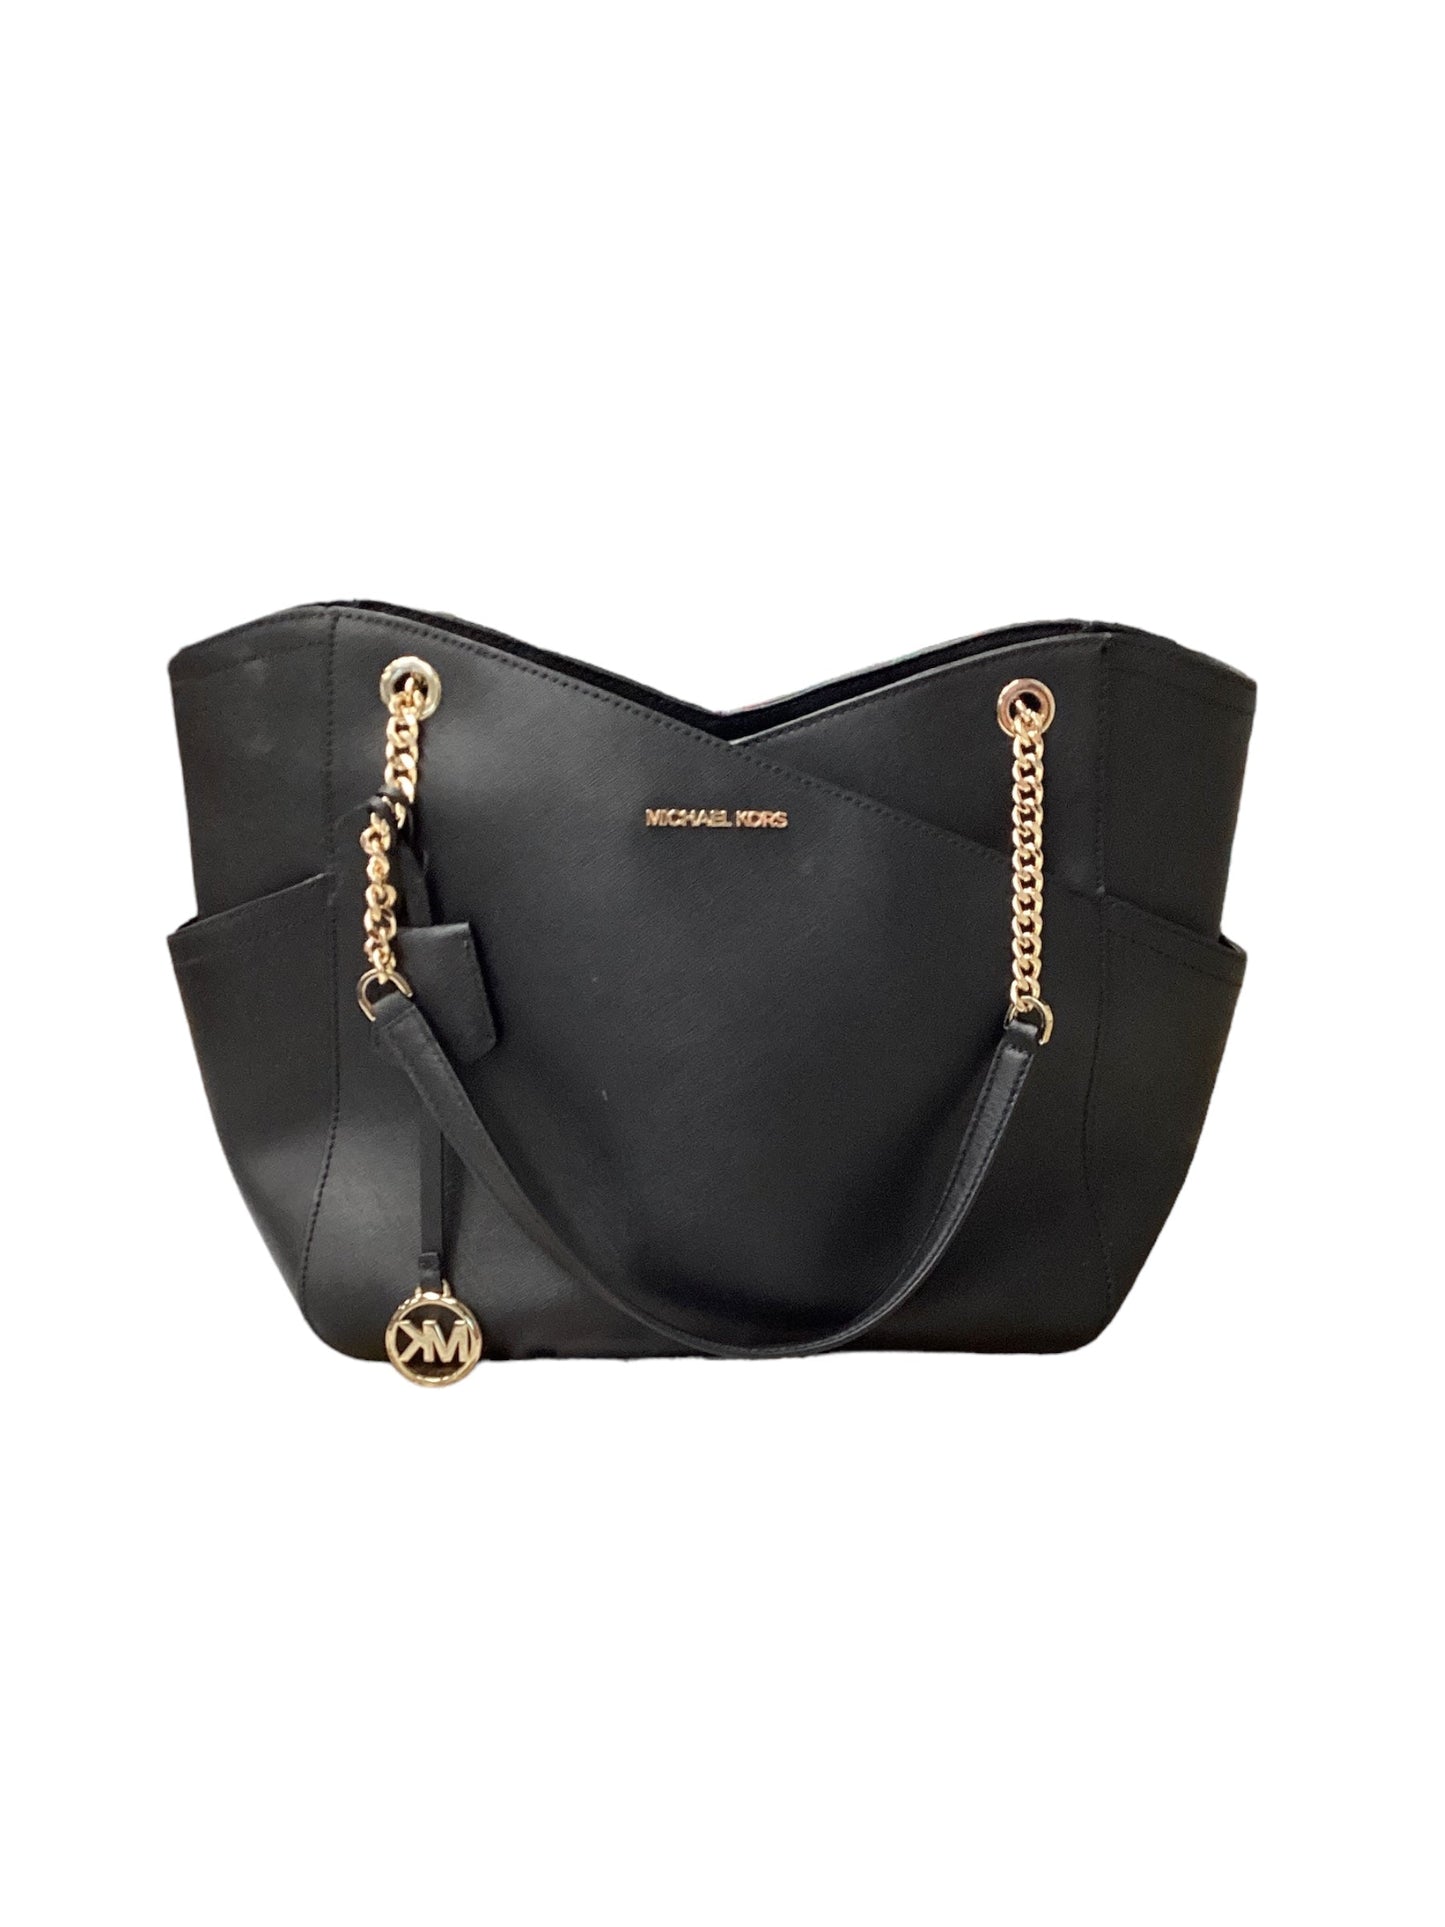 Black Handbag Michael Kors, Size Large